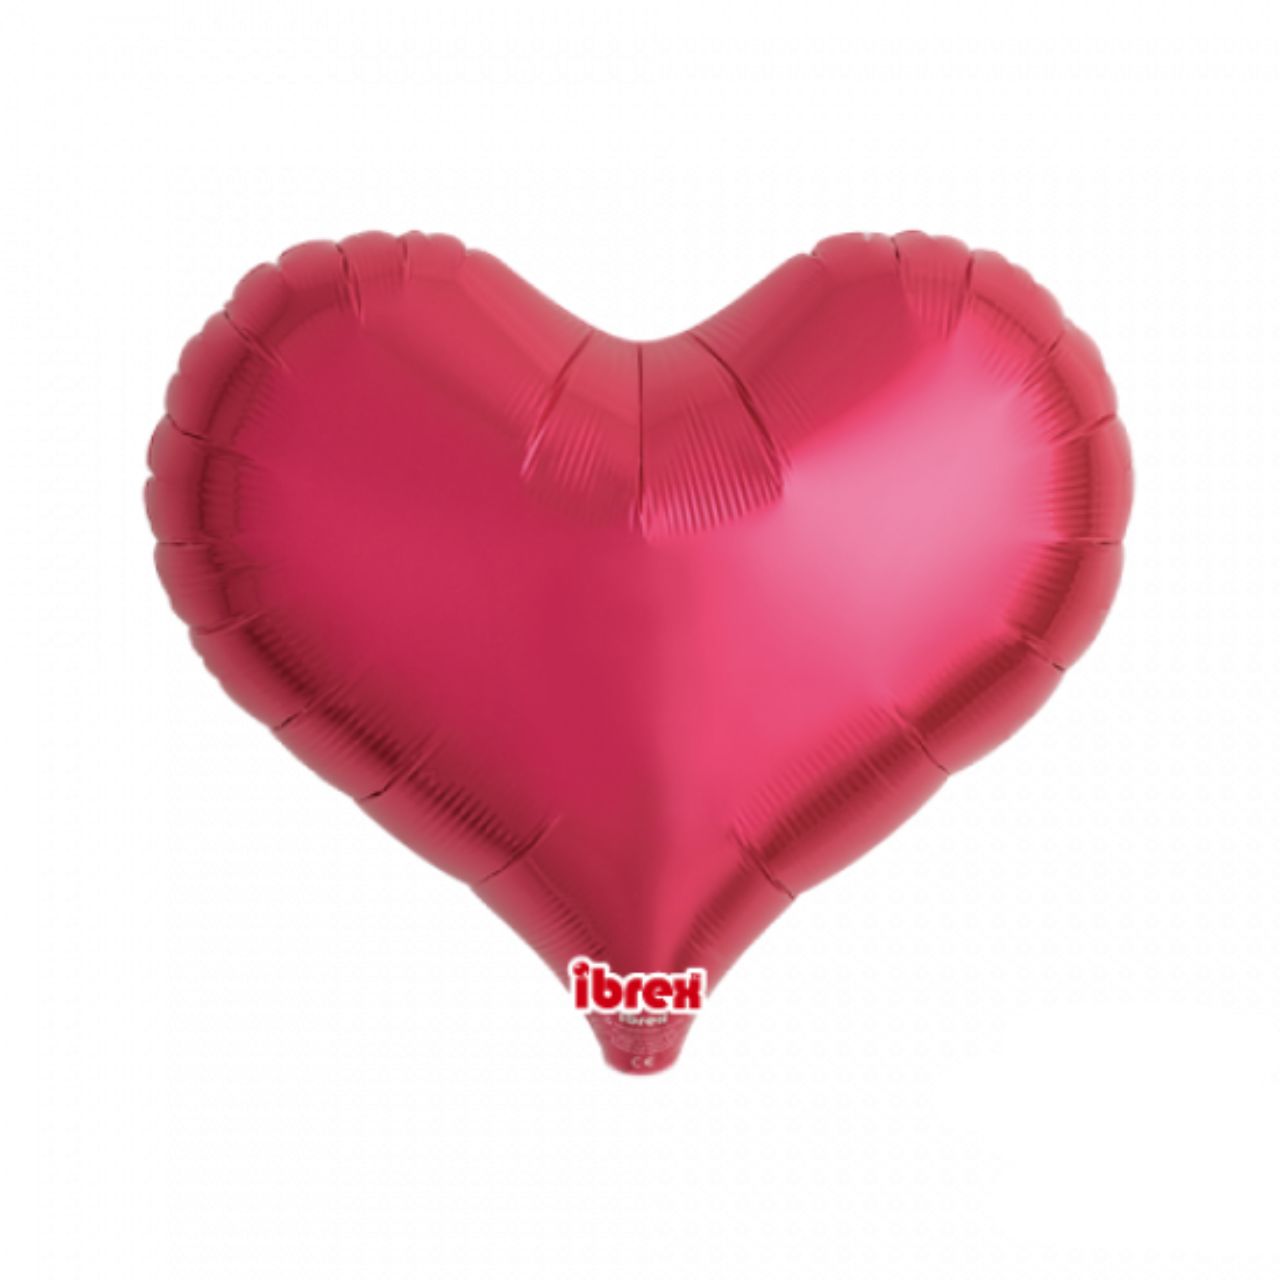 Ibreh Metallic Red Jelly Heart Foil Balloon (unpackaged)